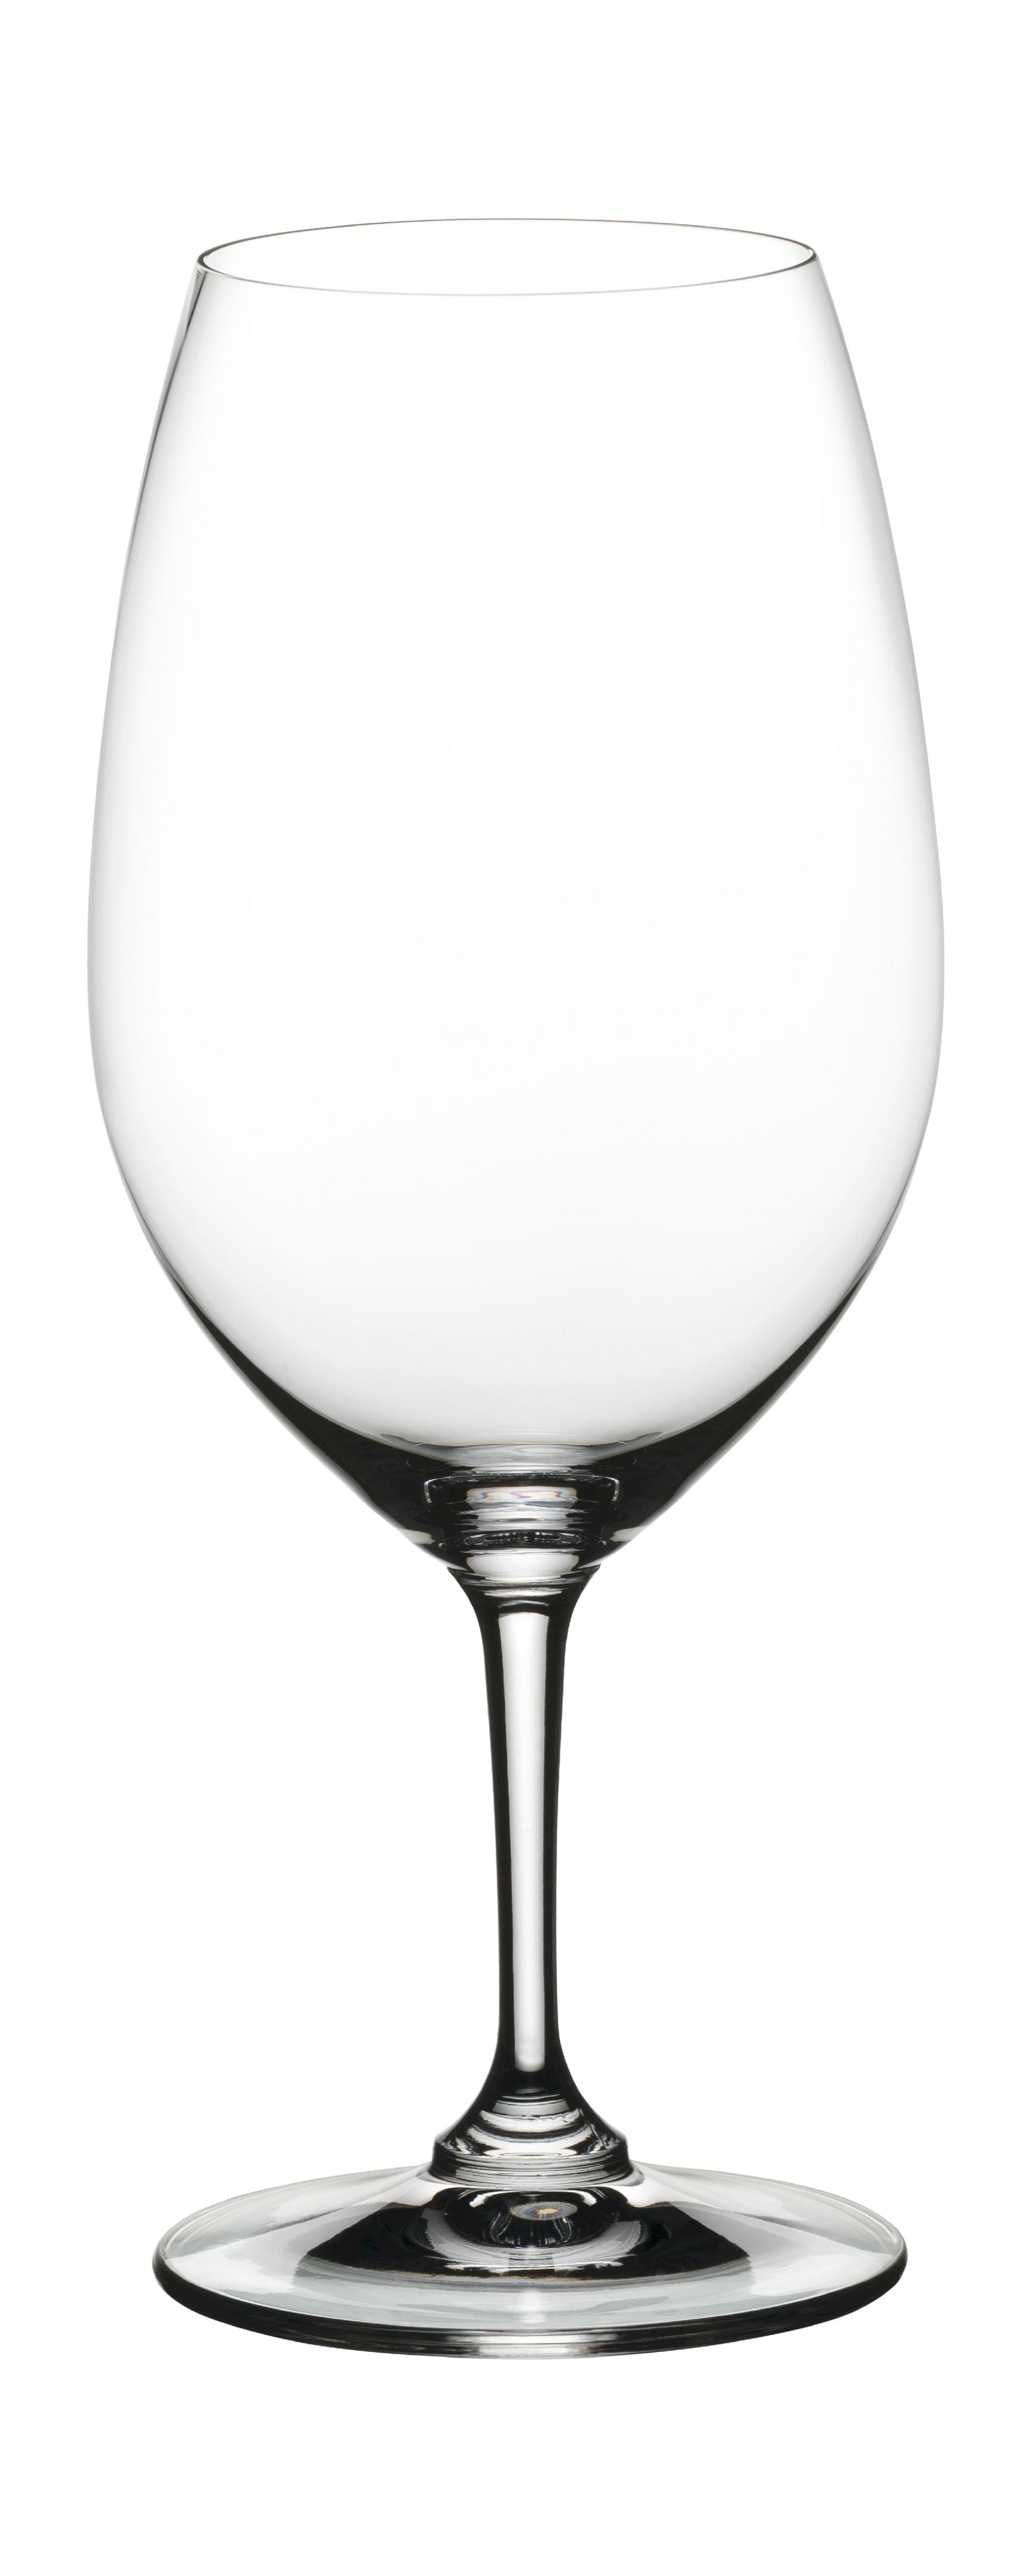 Nachtmann Vivino Bordeaux Glass 610 ml, 4 st.